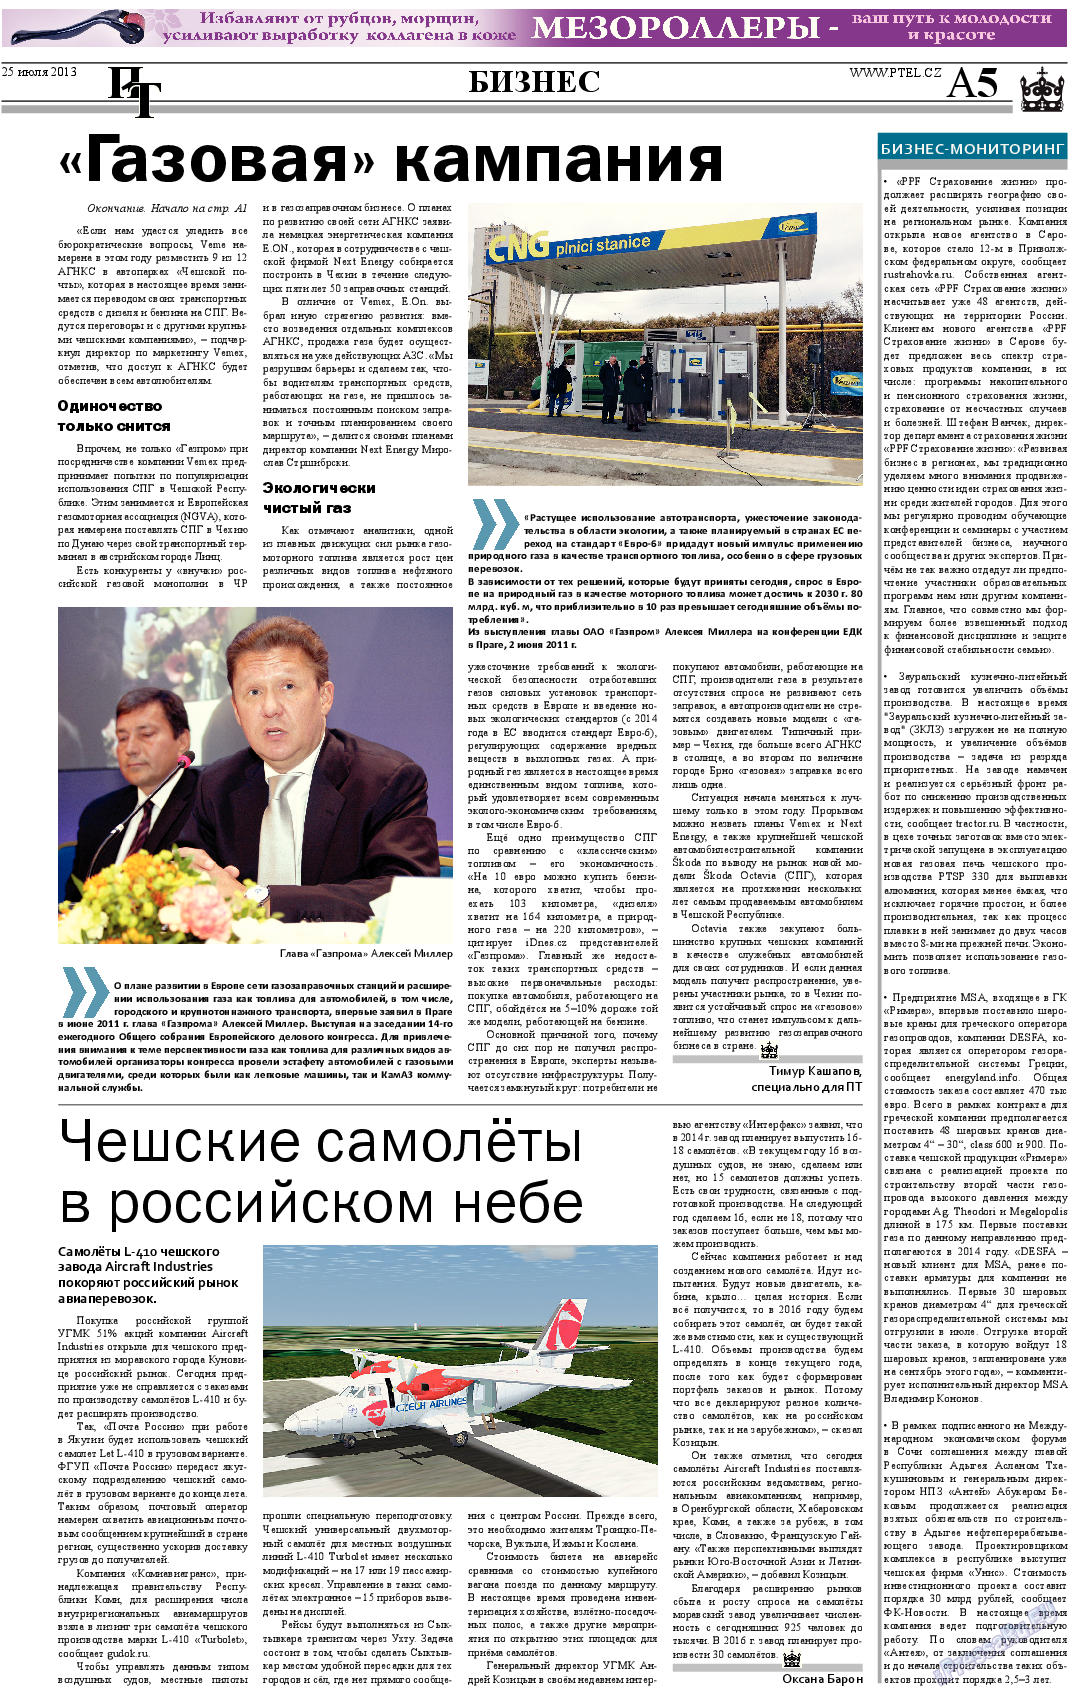 Пражский телеграф, газета. 2013 №29 стр.5